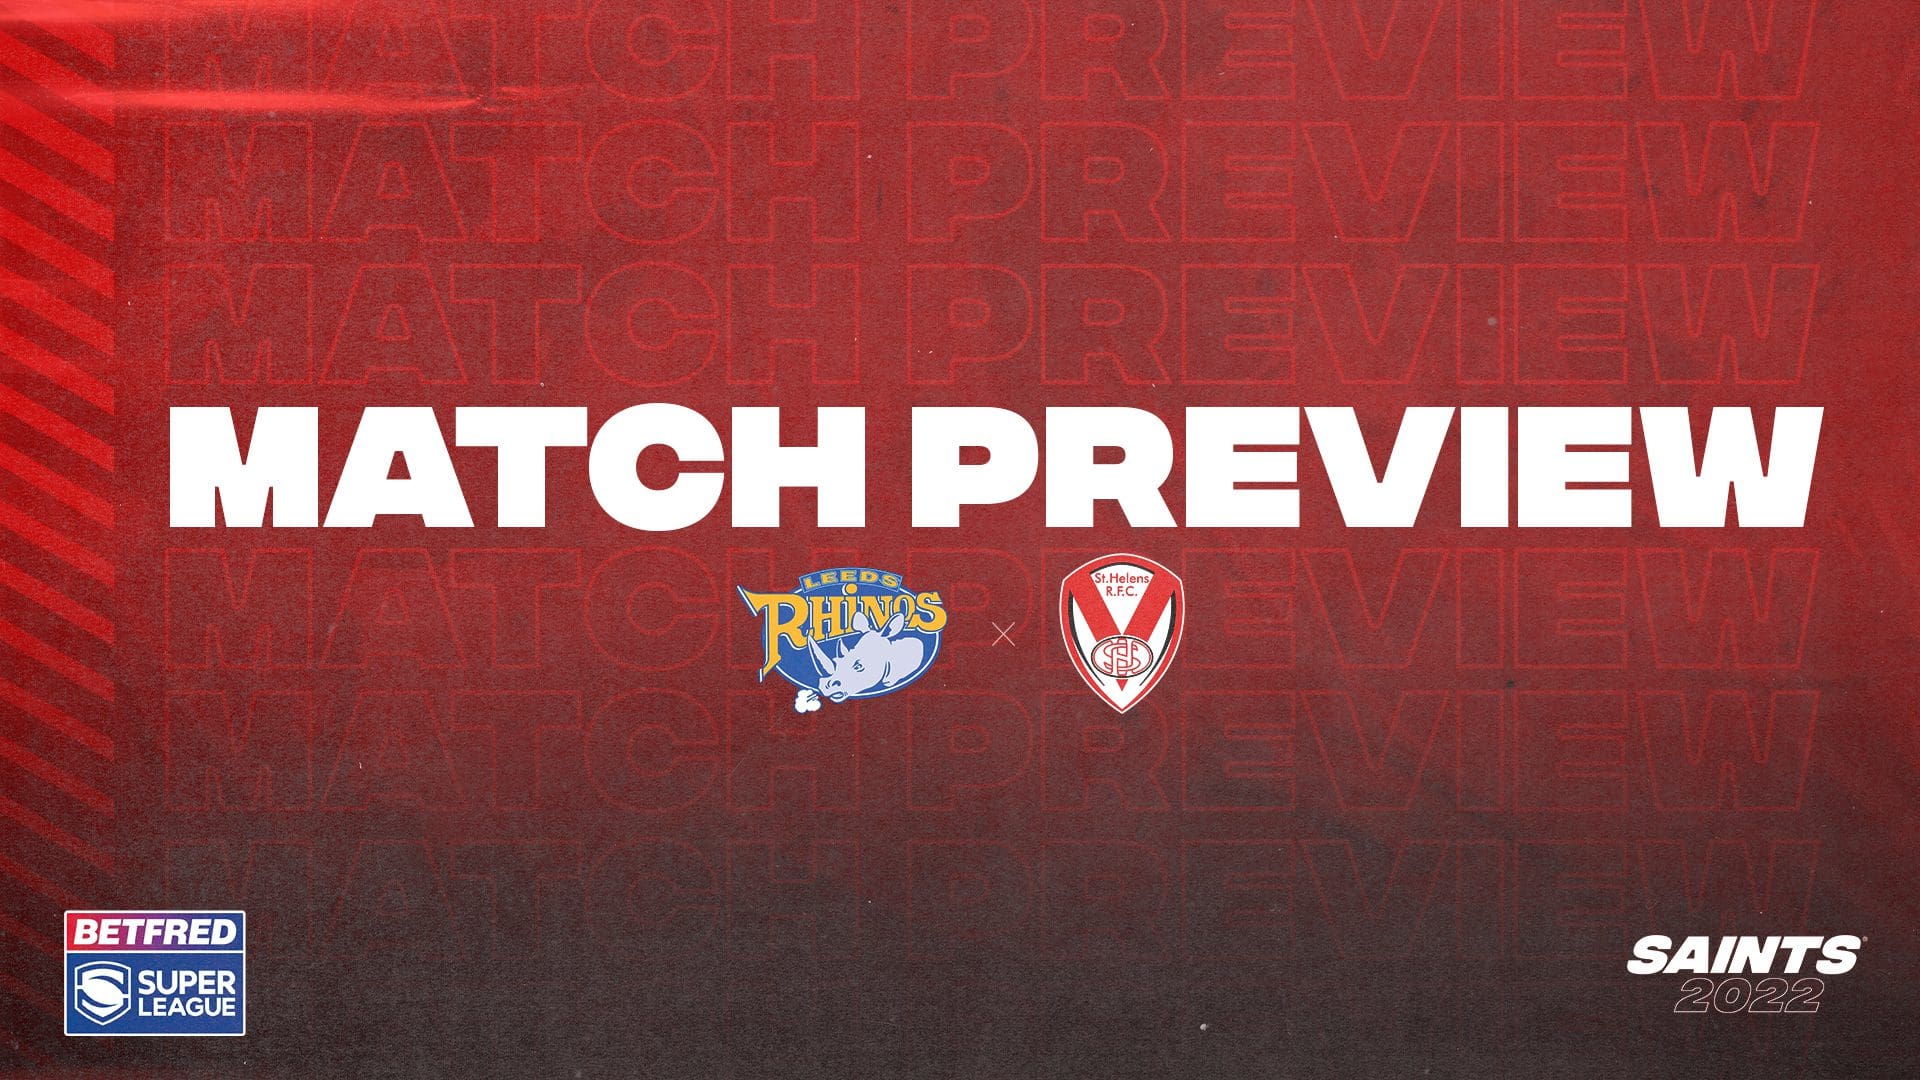 Match Preview Leeds Rhinos vs Saints